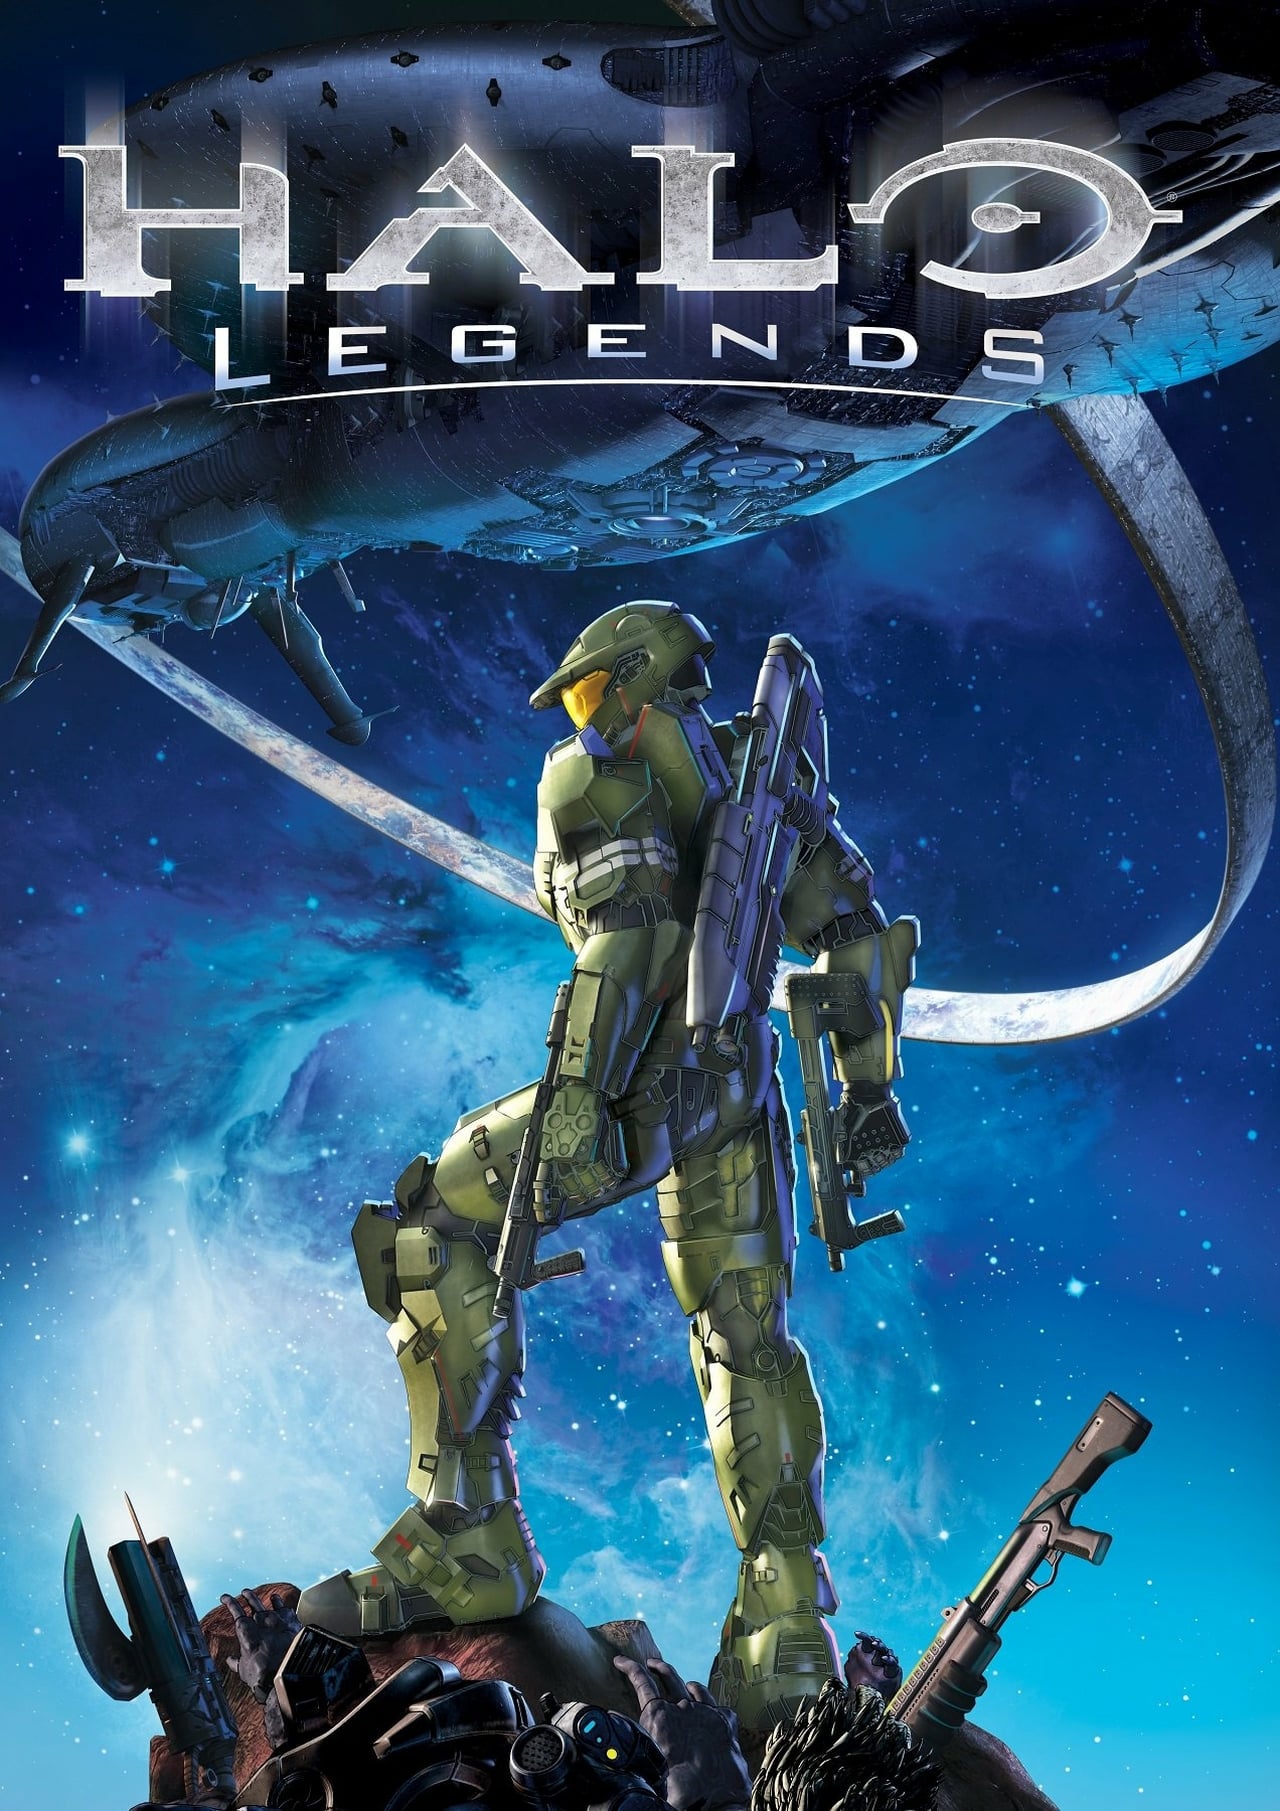 2010 Halo: Legends